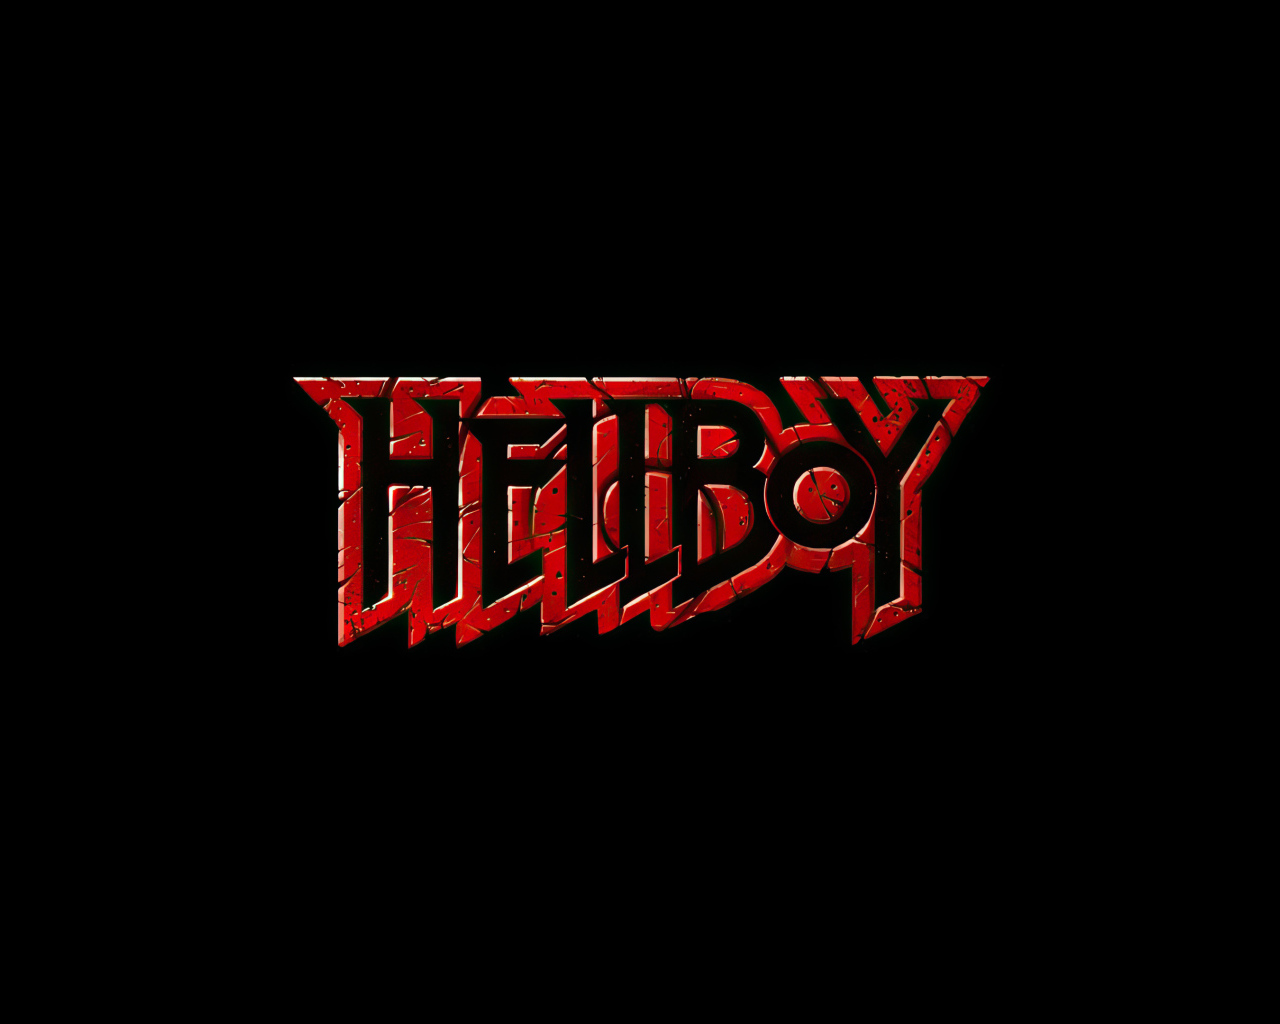 Hellboy movie logo on black background